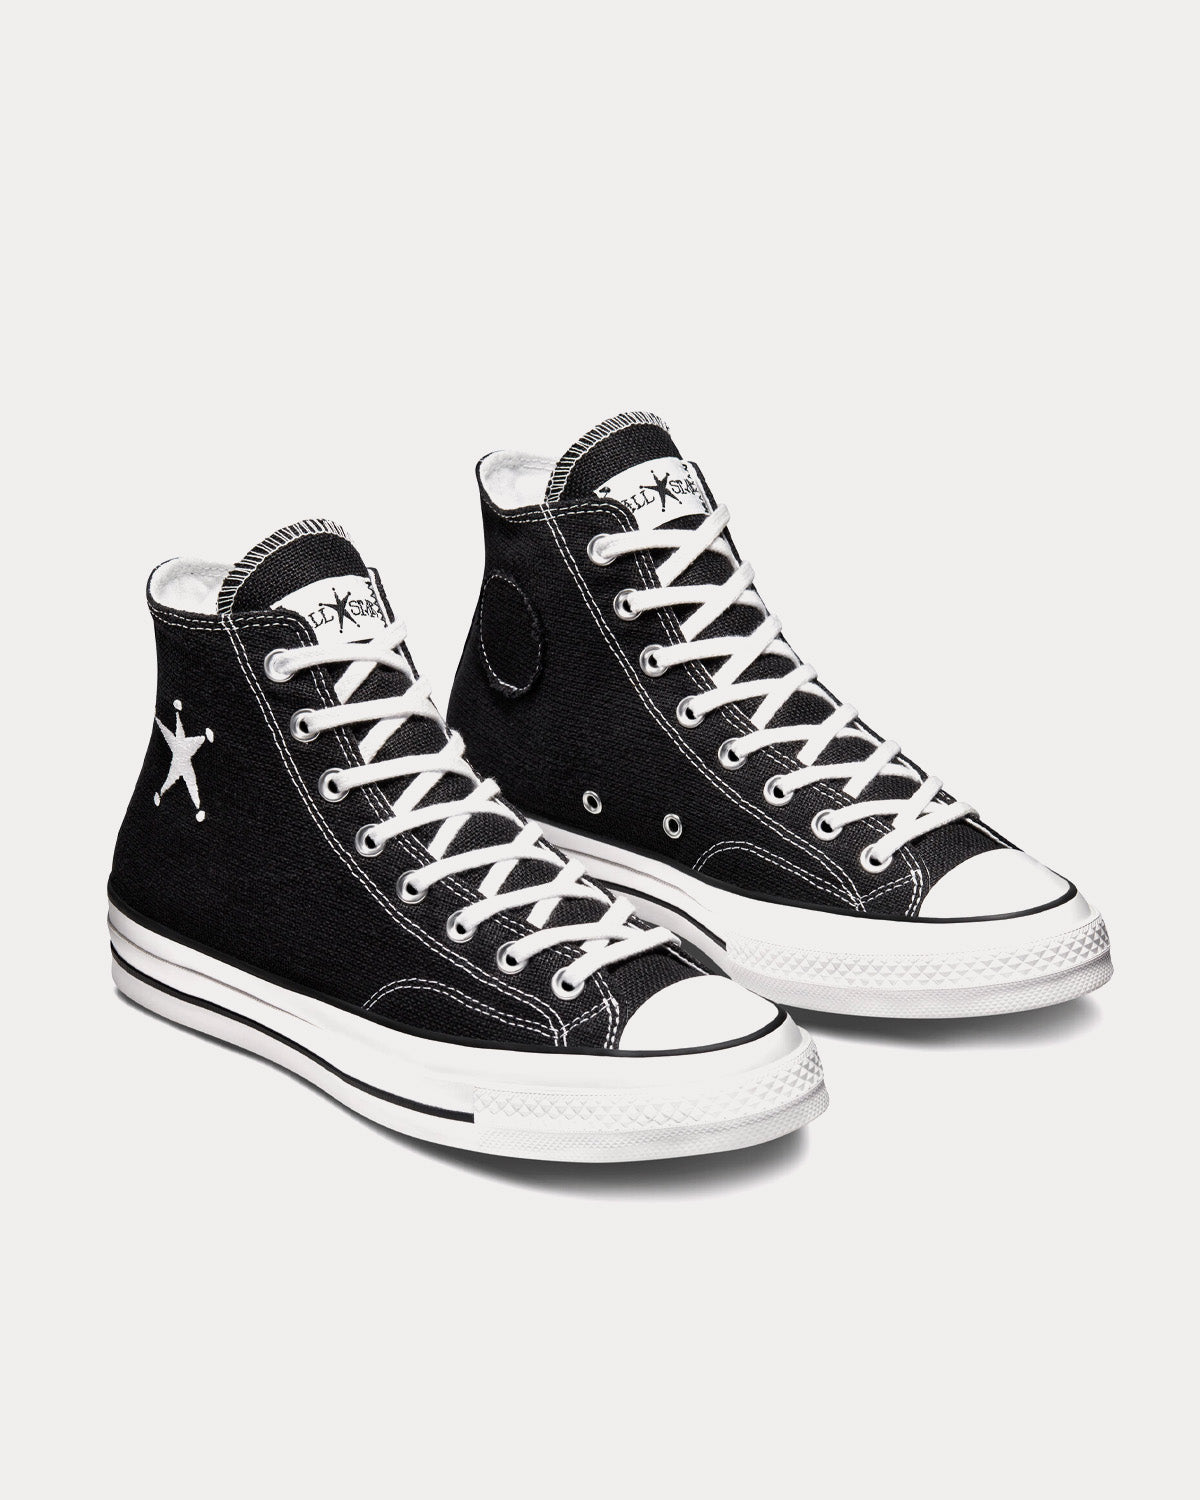 Converse x Stüssy - Chuck 70 Black / White High Top Sneakers